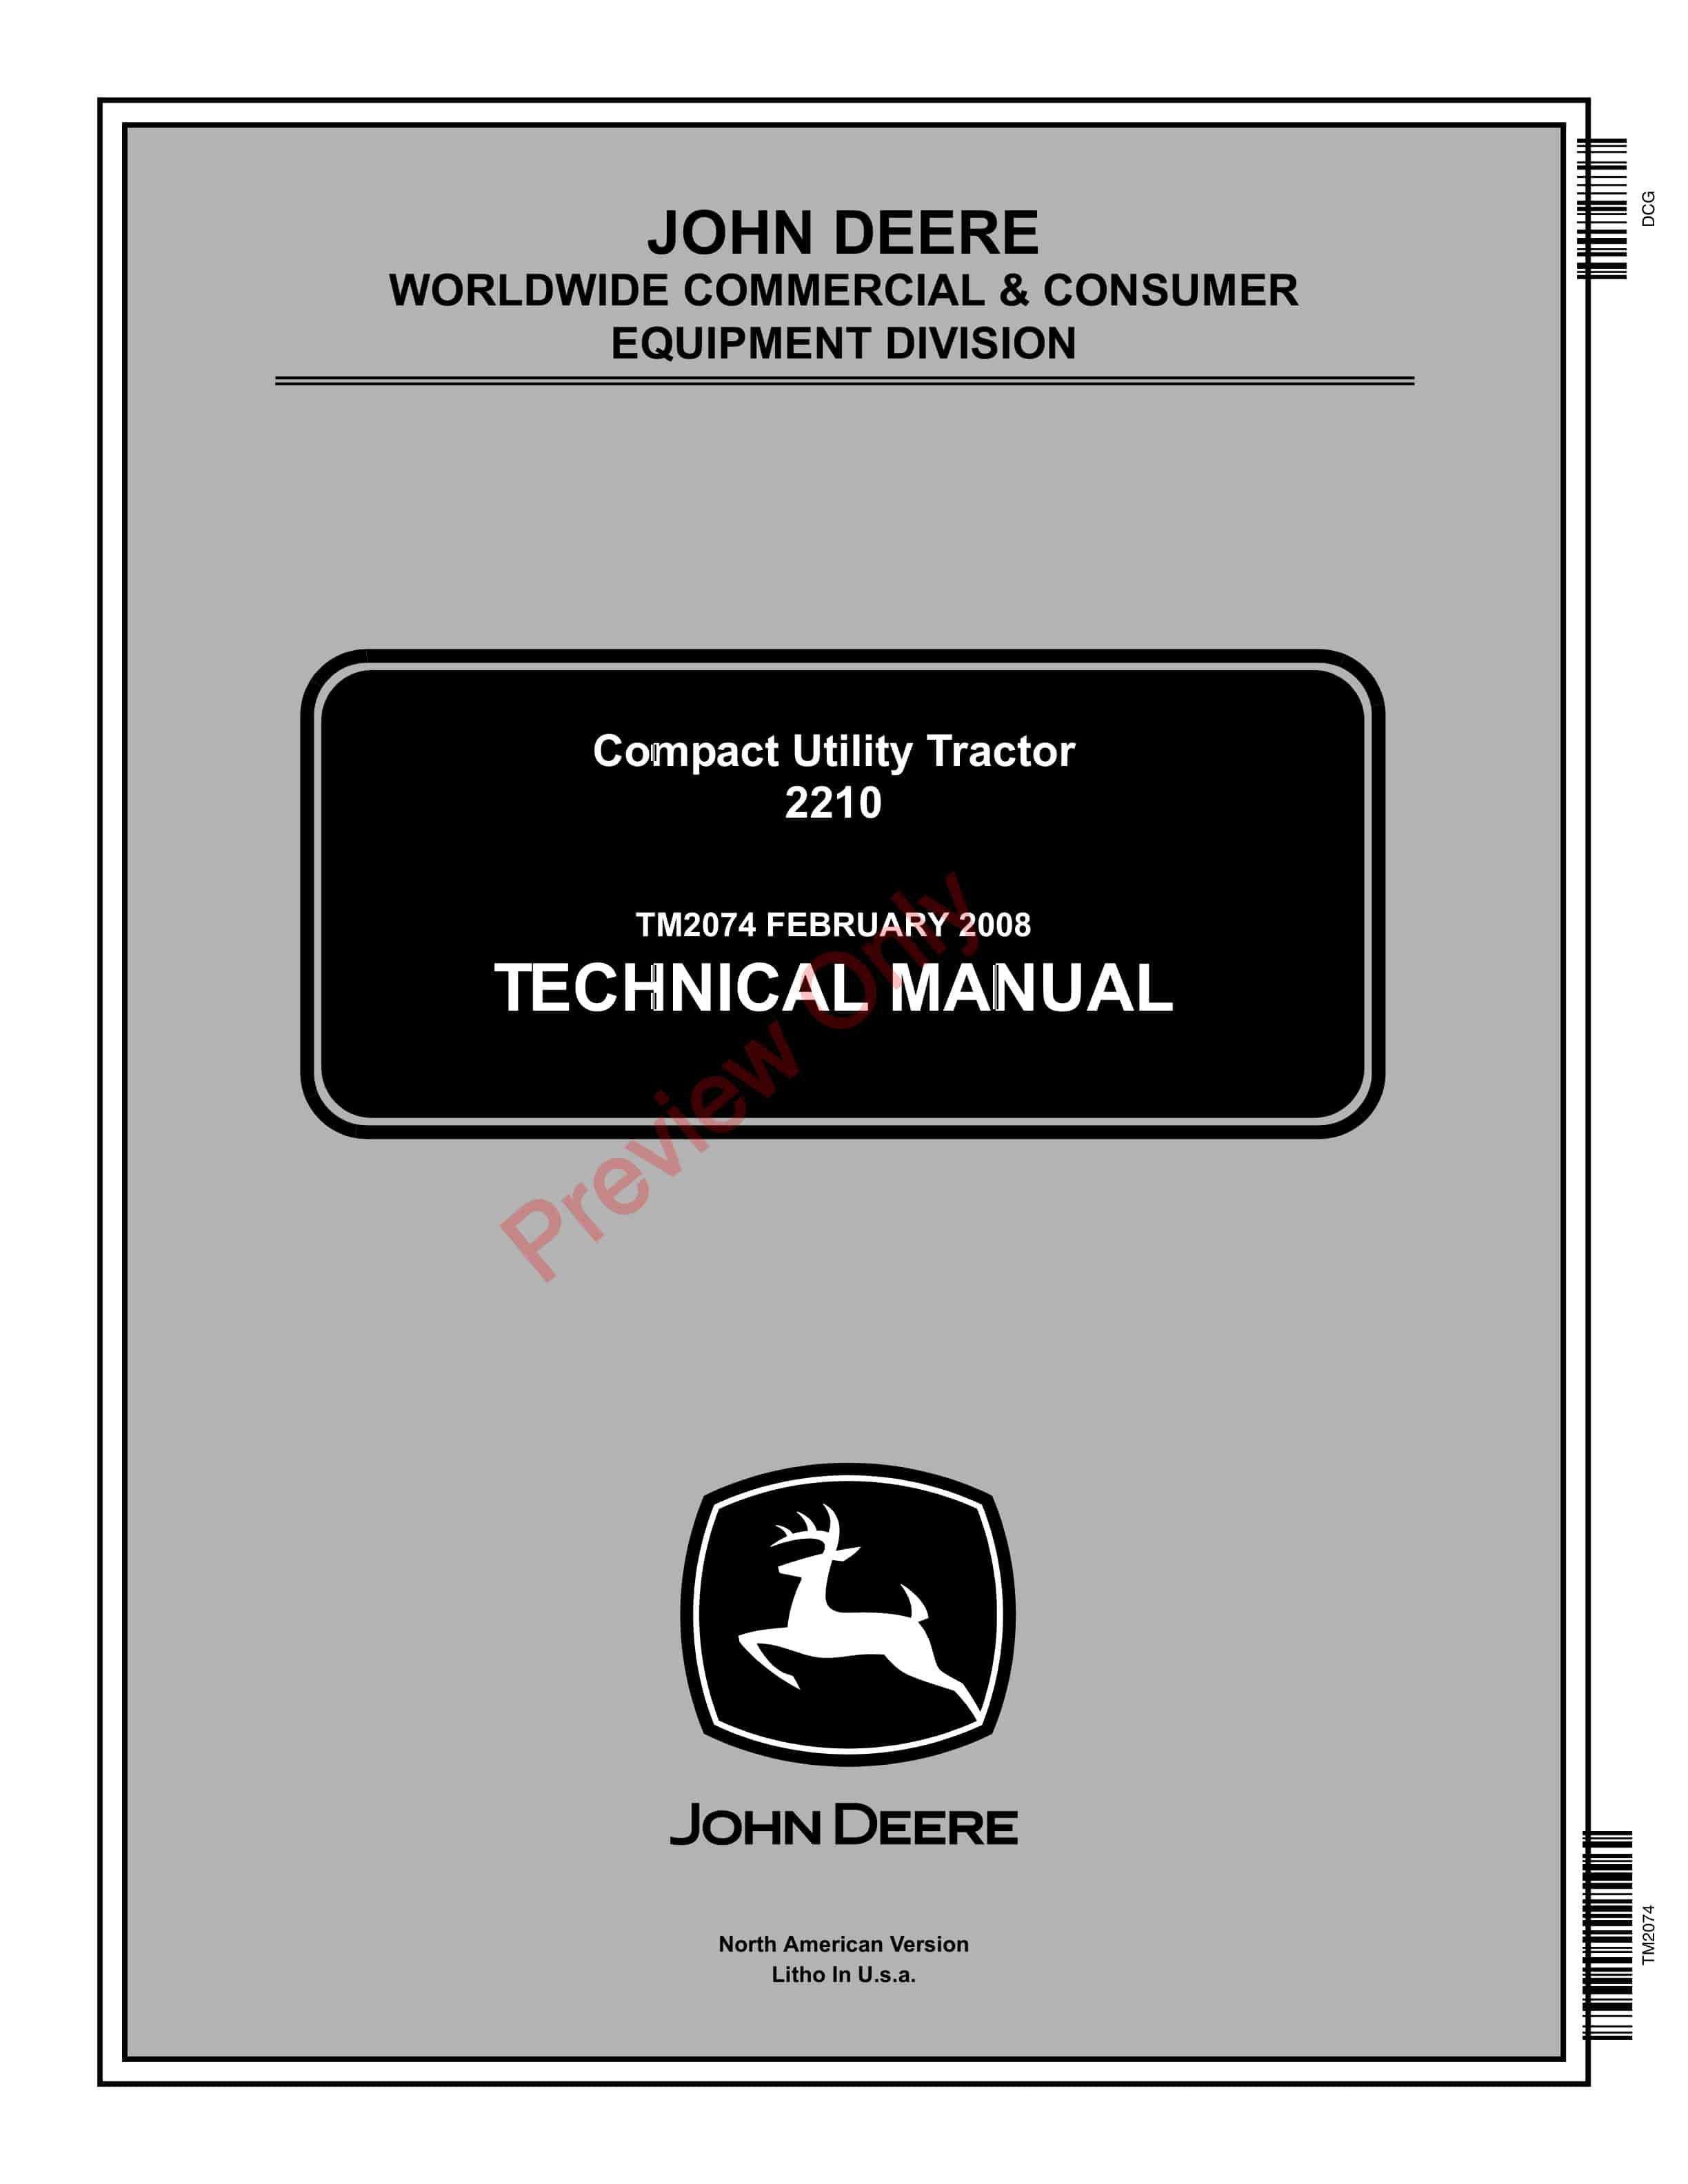 John Deere 2210 Compact Utility Tractor Technical Manual TM2074 01FEB08 1